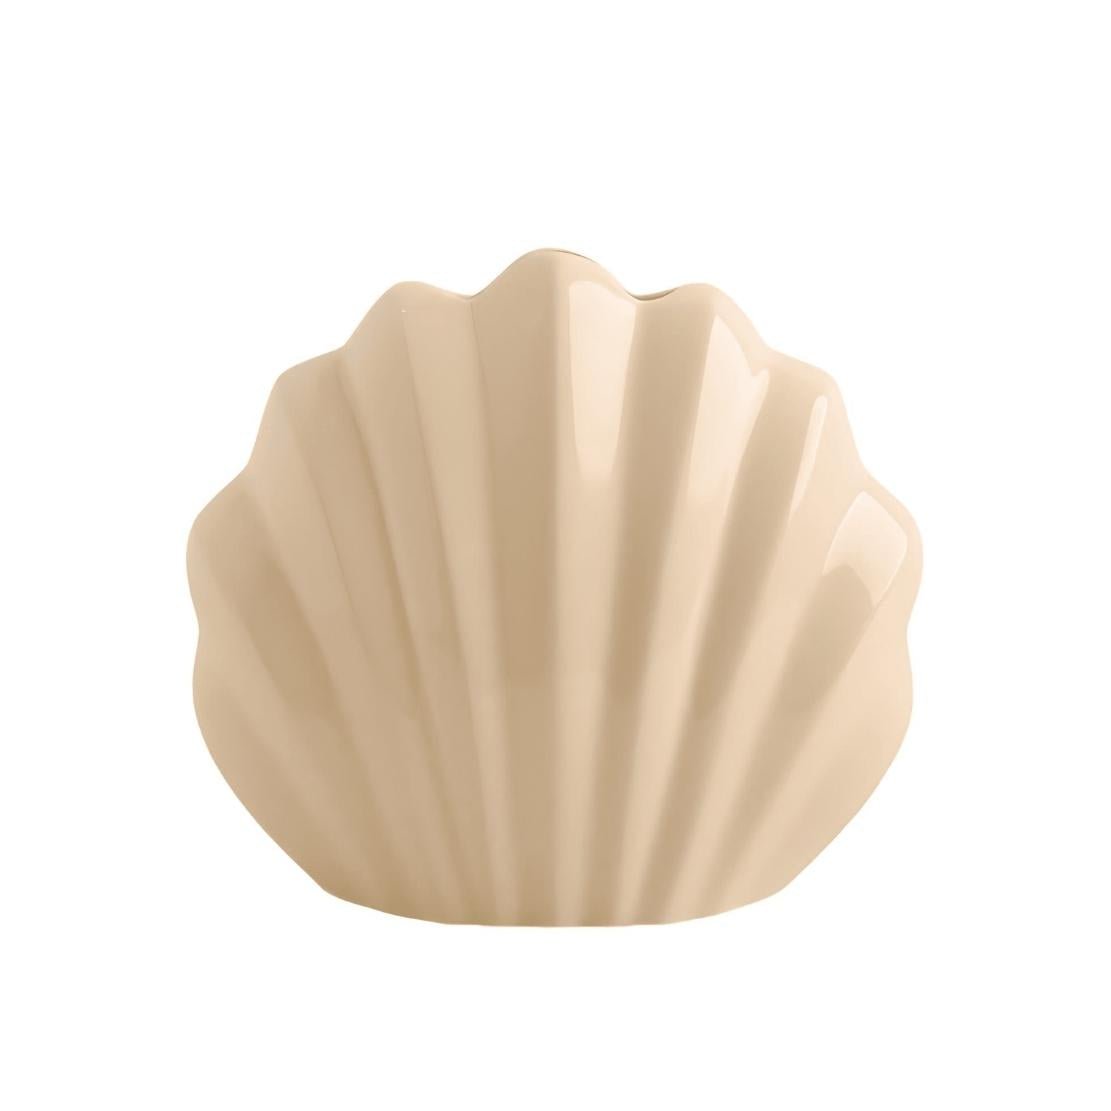 Cream yellow glazed ceramic shell vase